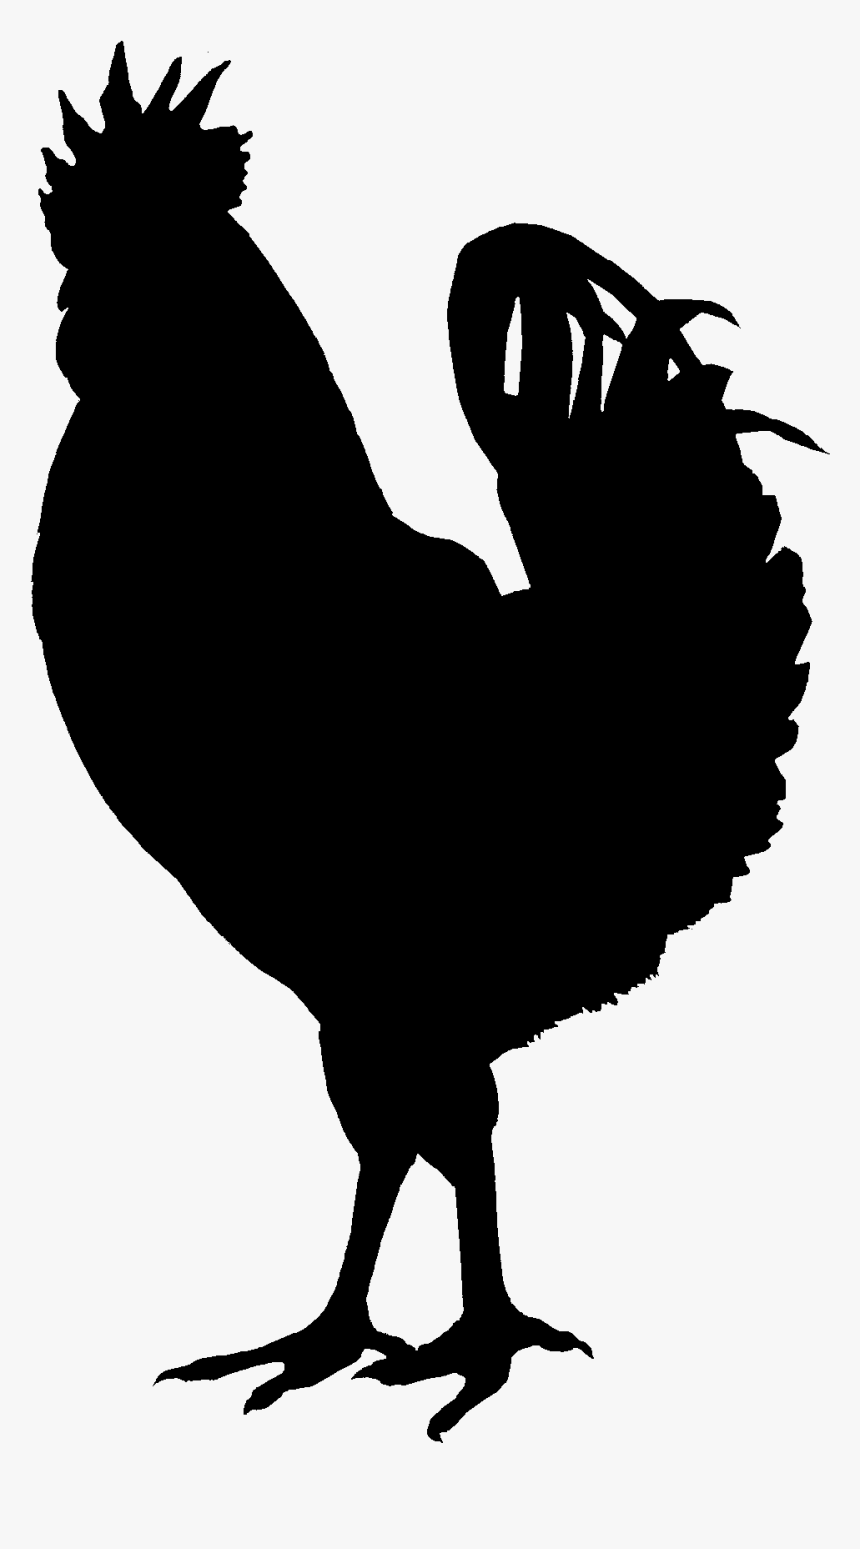 Black and White Chicken Clip Art - Black and White Chicken Image - Clip ...